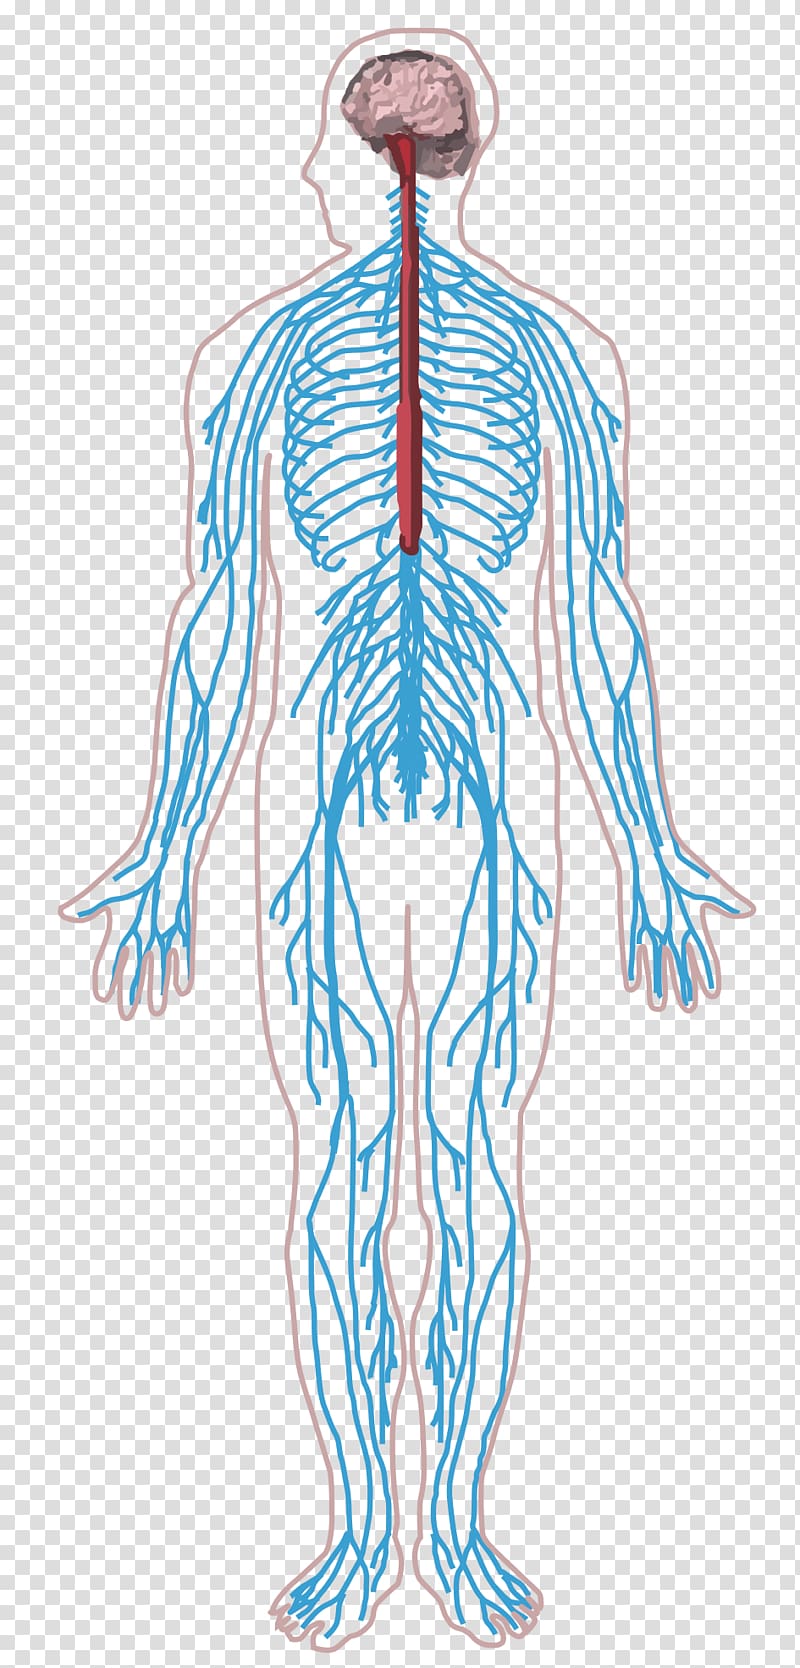 Human anatomy illustration art, Peripheral nervous system Nerve